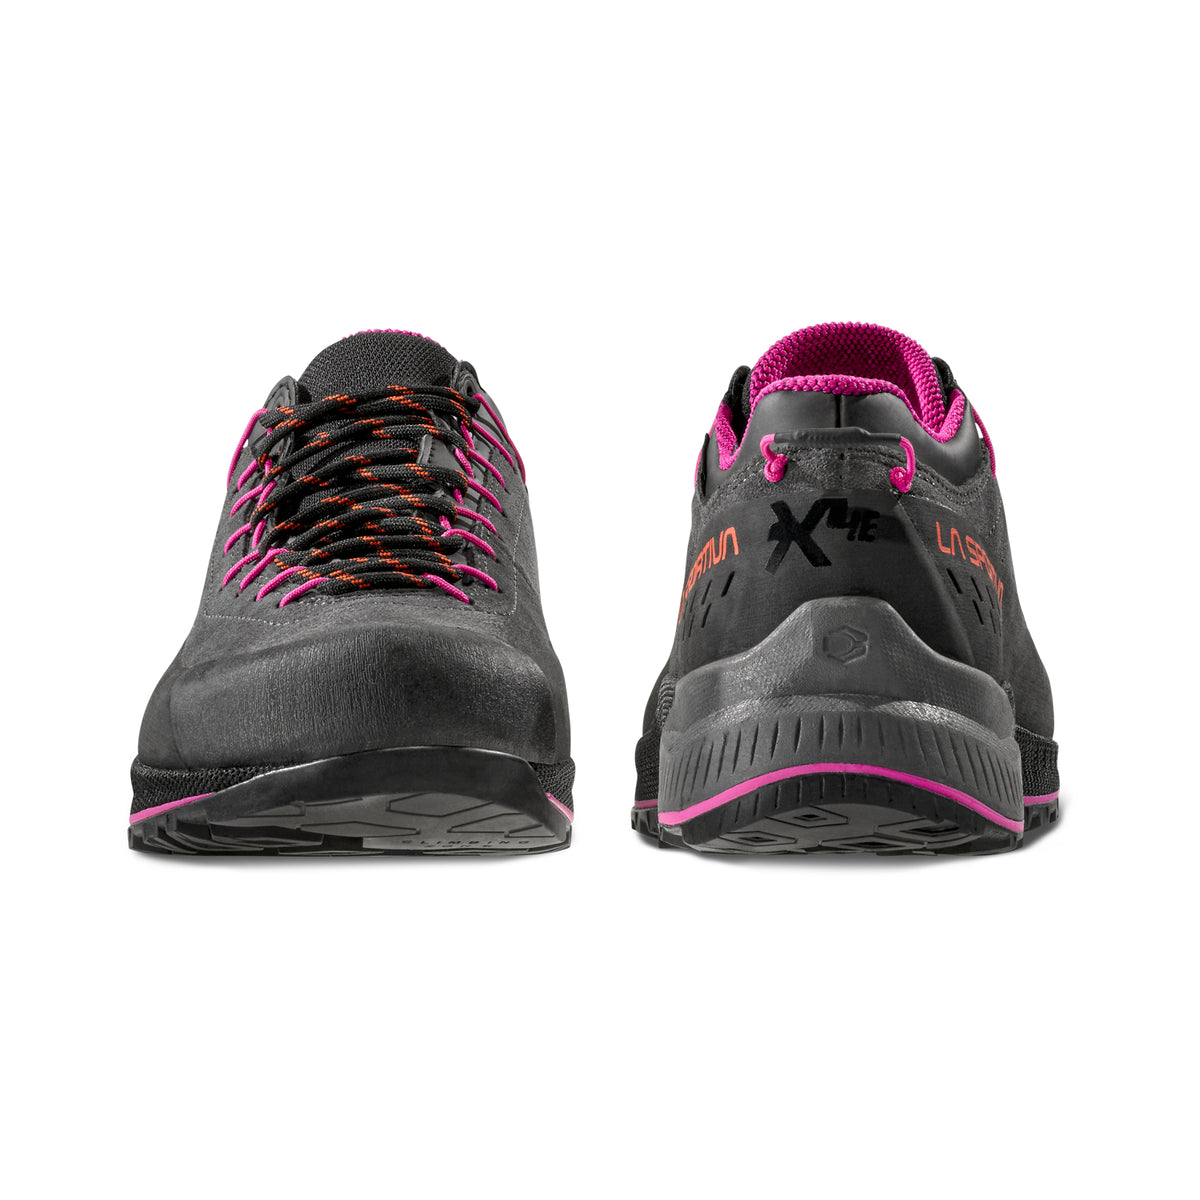 La Sportiva TX4 Evo GTX - Womens approach shoes in carbon springtime colour